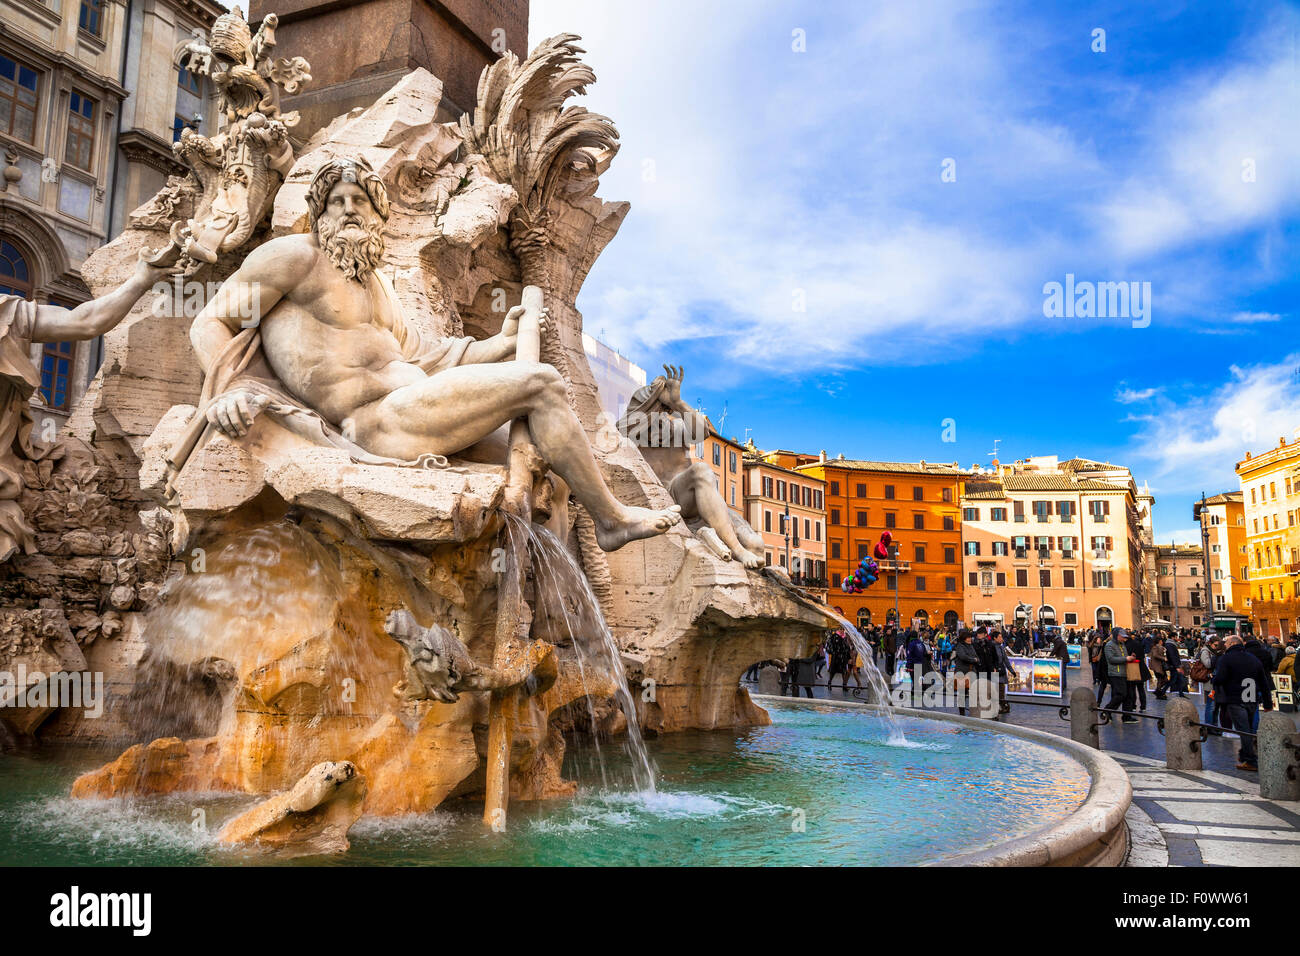 Amazing masterpiece of Bernini - fountain in piazza Navona, Rome Stock Photo